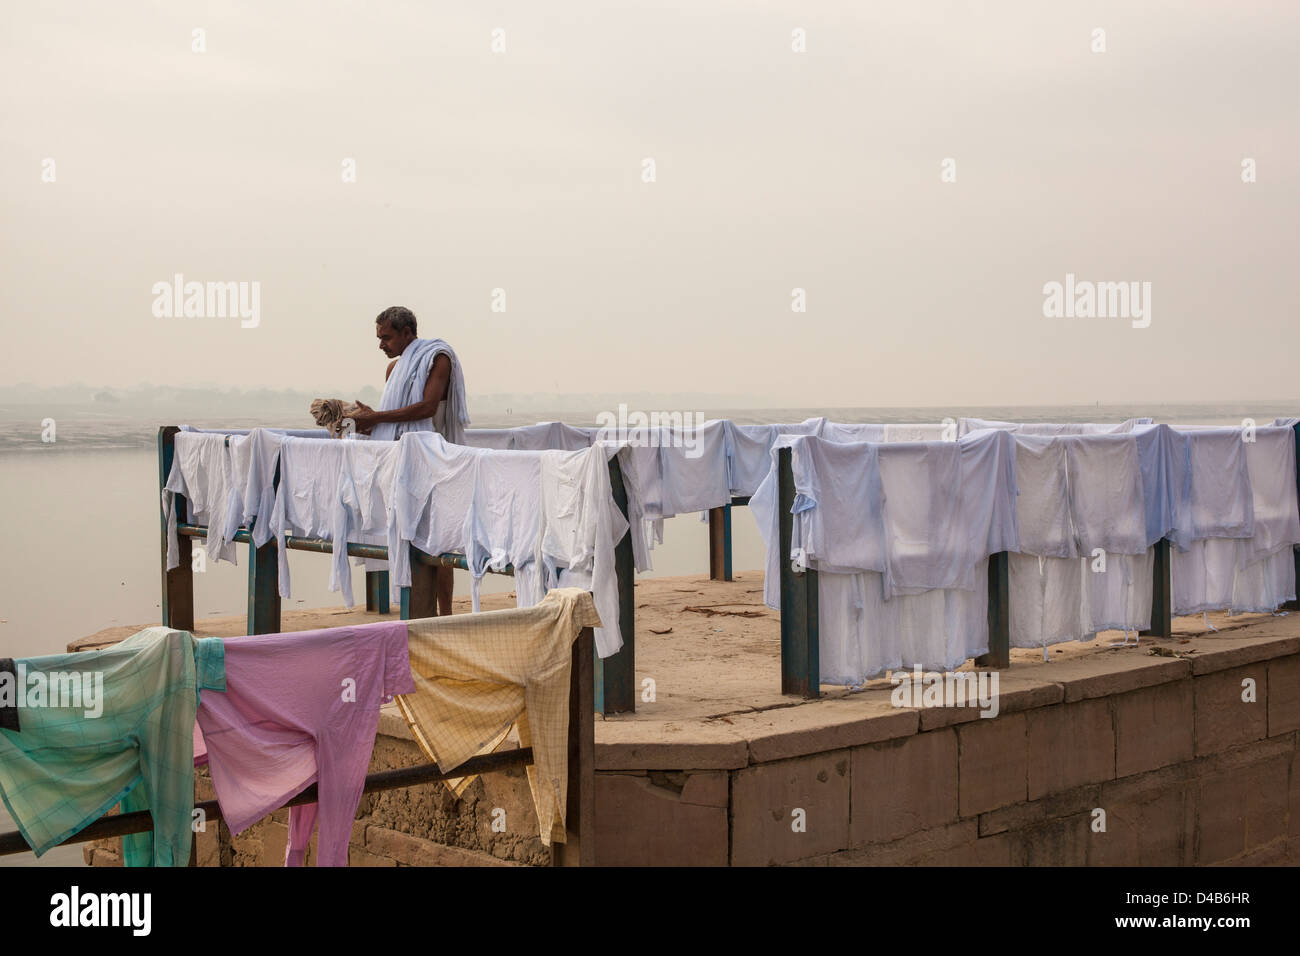 washing hanging out to dry, Varanasi, India Stock Photo